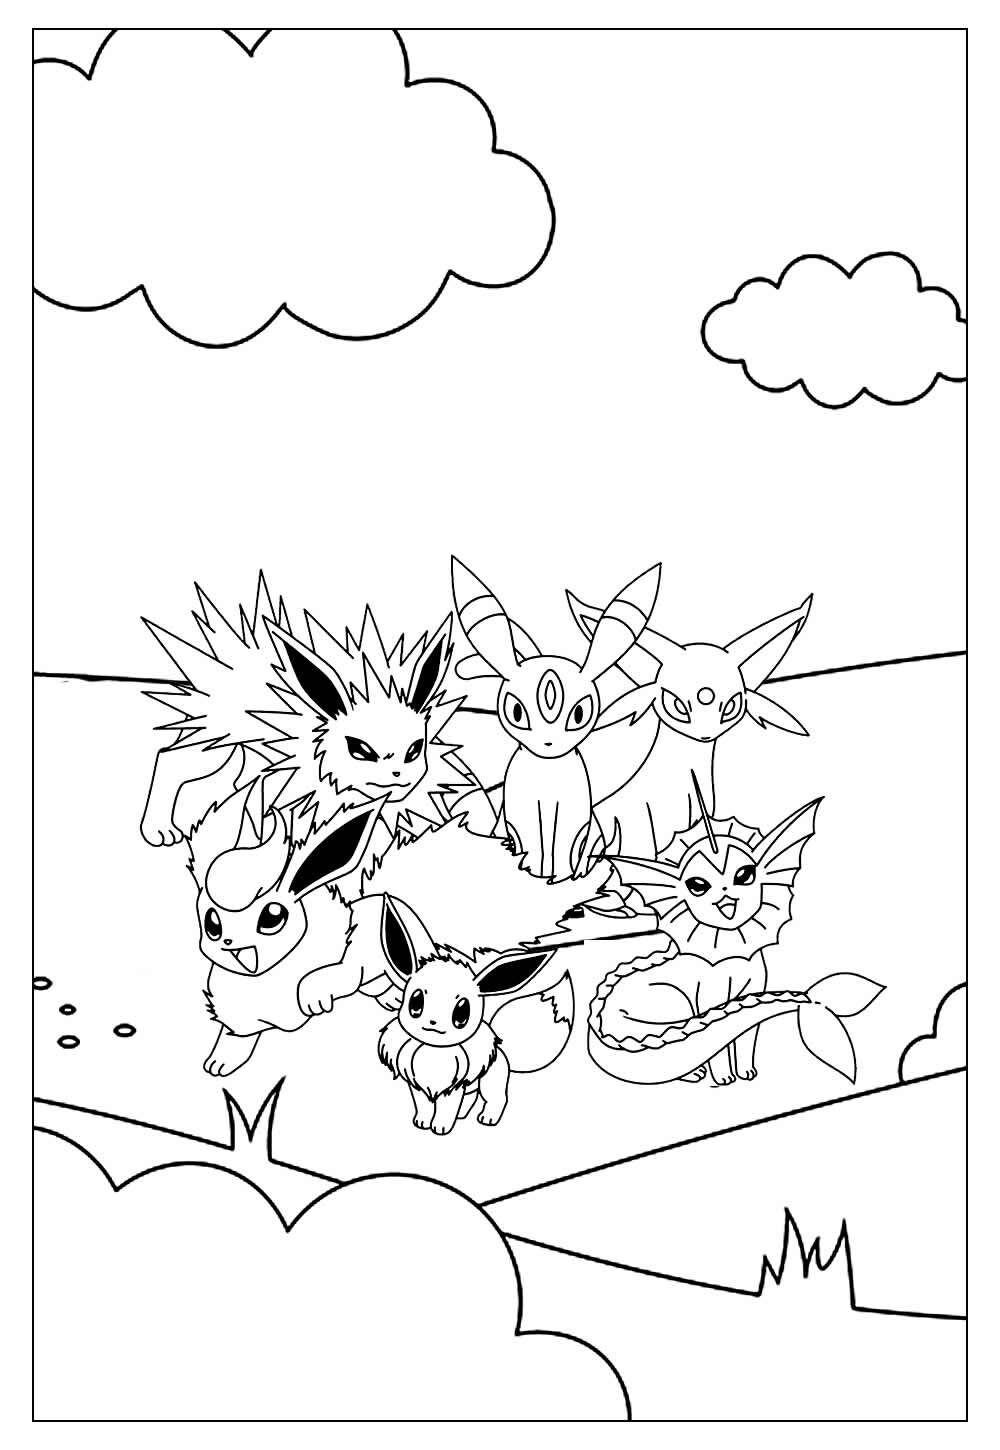 Desenhos do Pokemon para imprimir e colorir  Pokemon, Hình vẽ dễ thương,  Pikachu